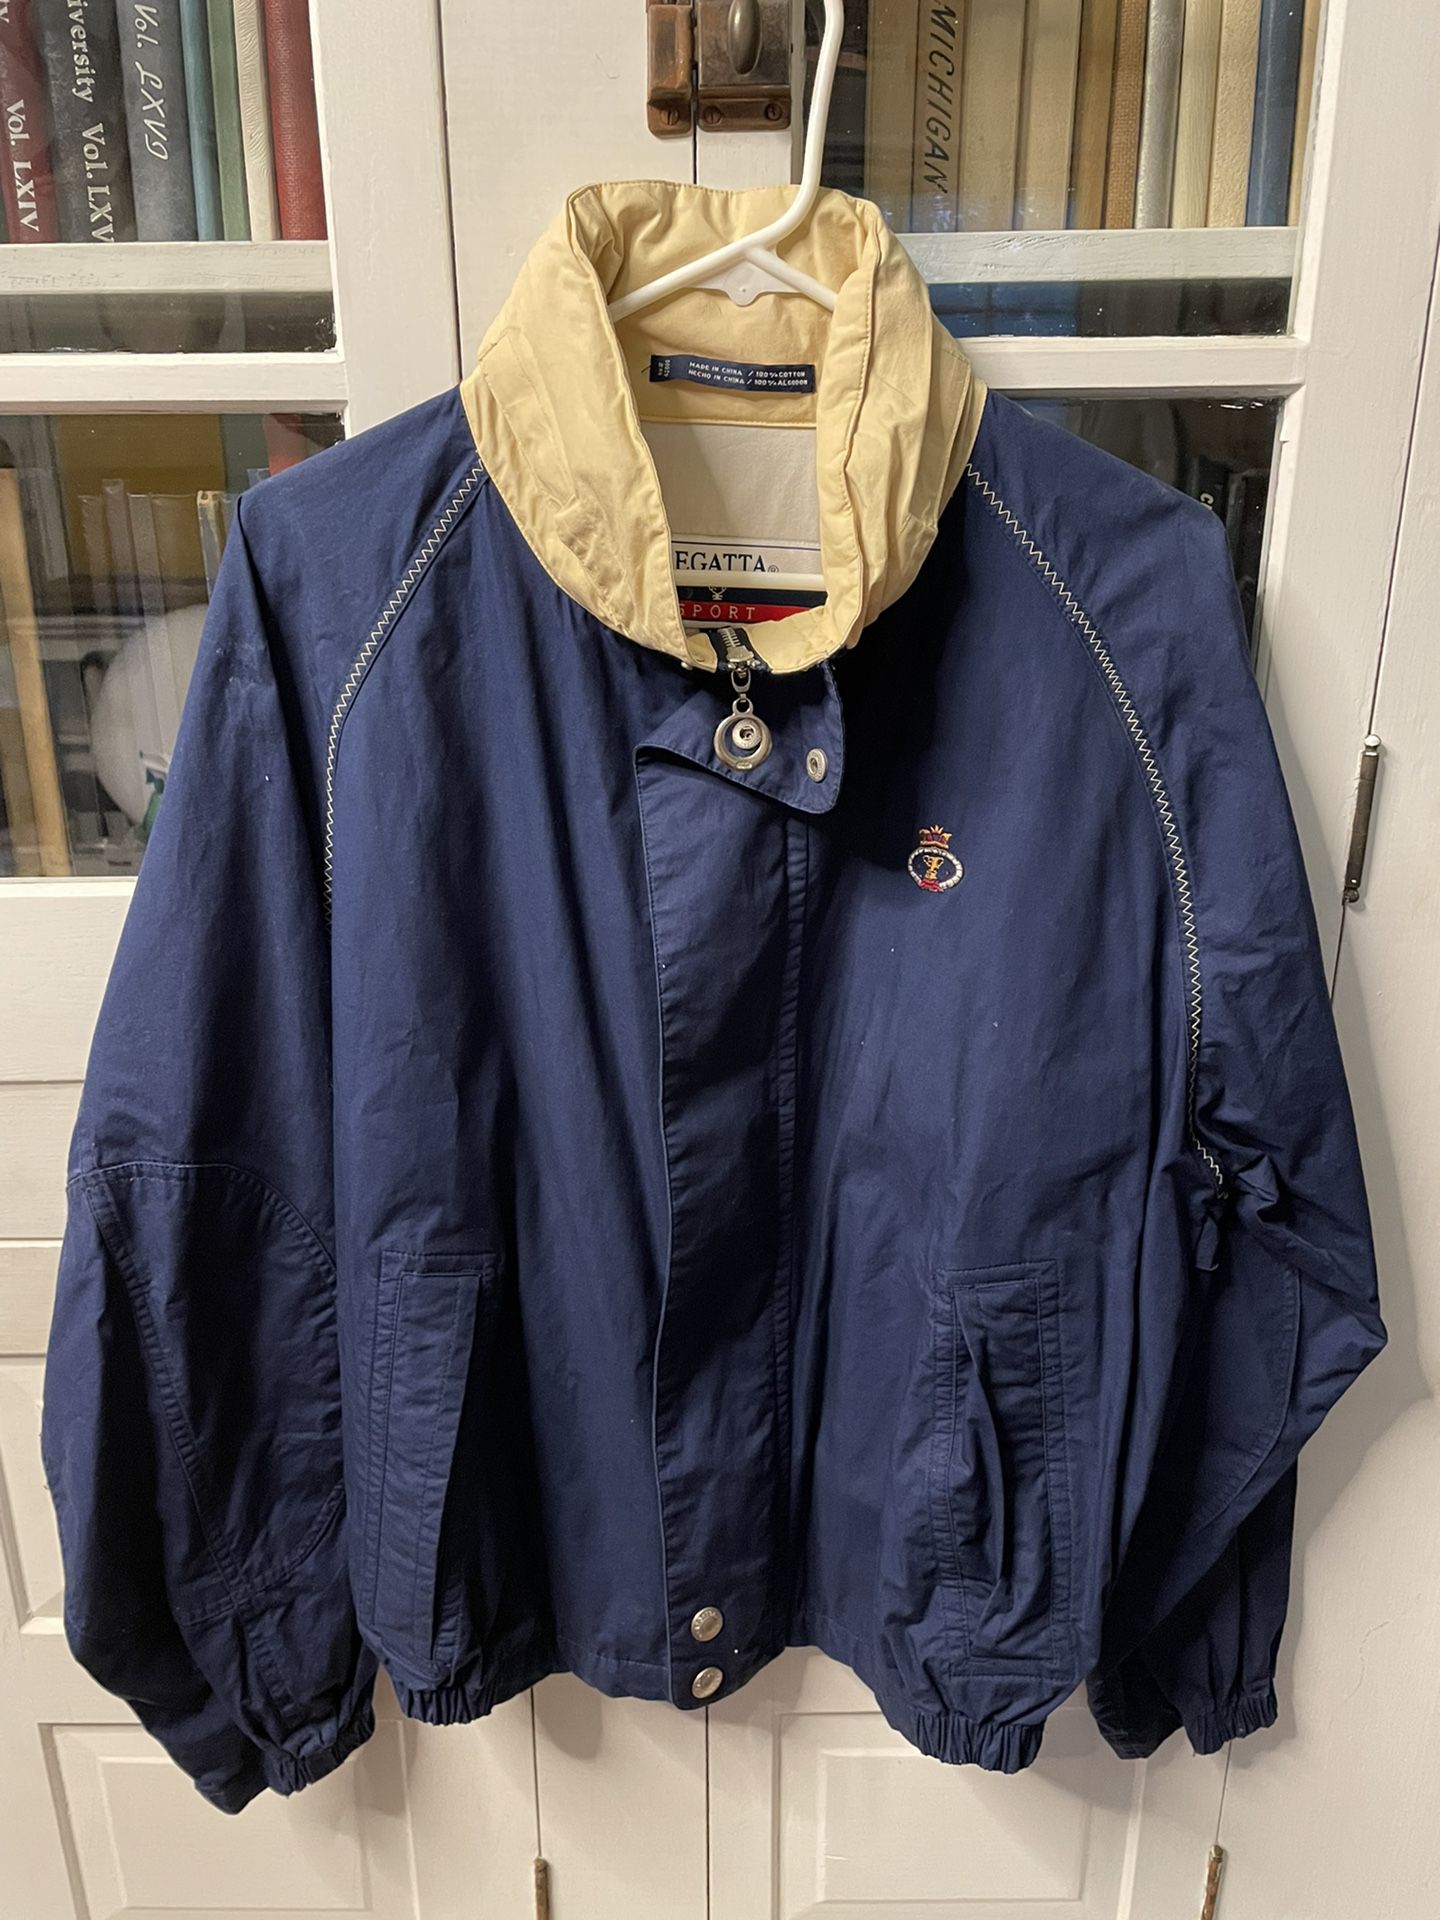 Vintage REGATTA Sport Sailing Windbreaker Hooded Jacket Coat Men’s Size Medium